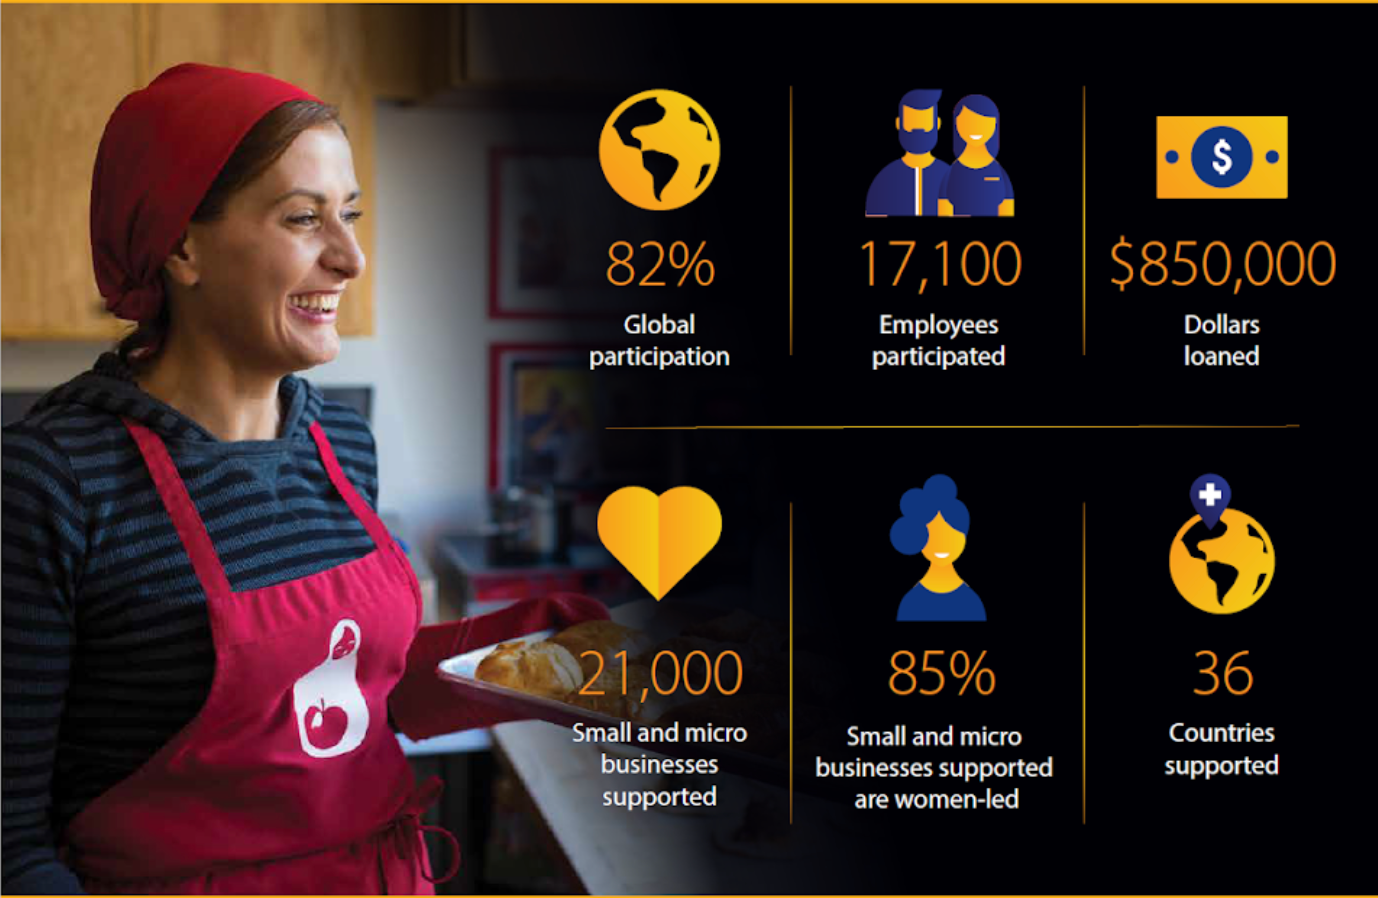 “Best Employee Engagement Initiative” — Kiva’s partnership with Visa wins a Gold Halo award